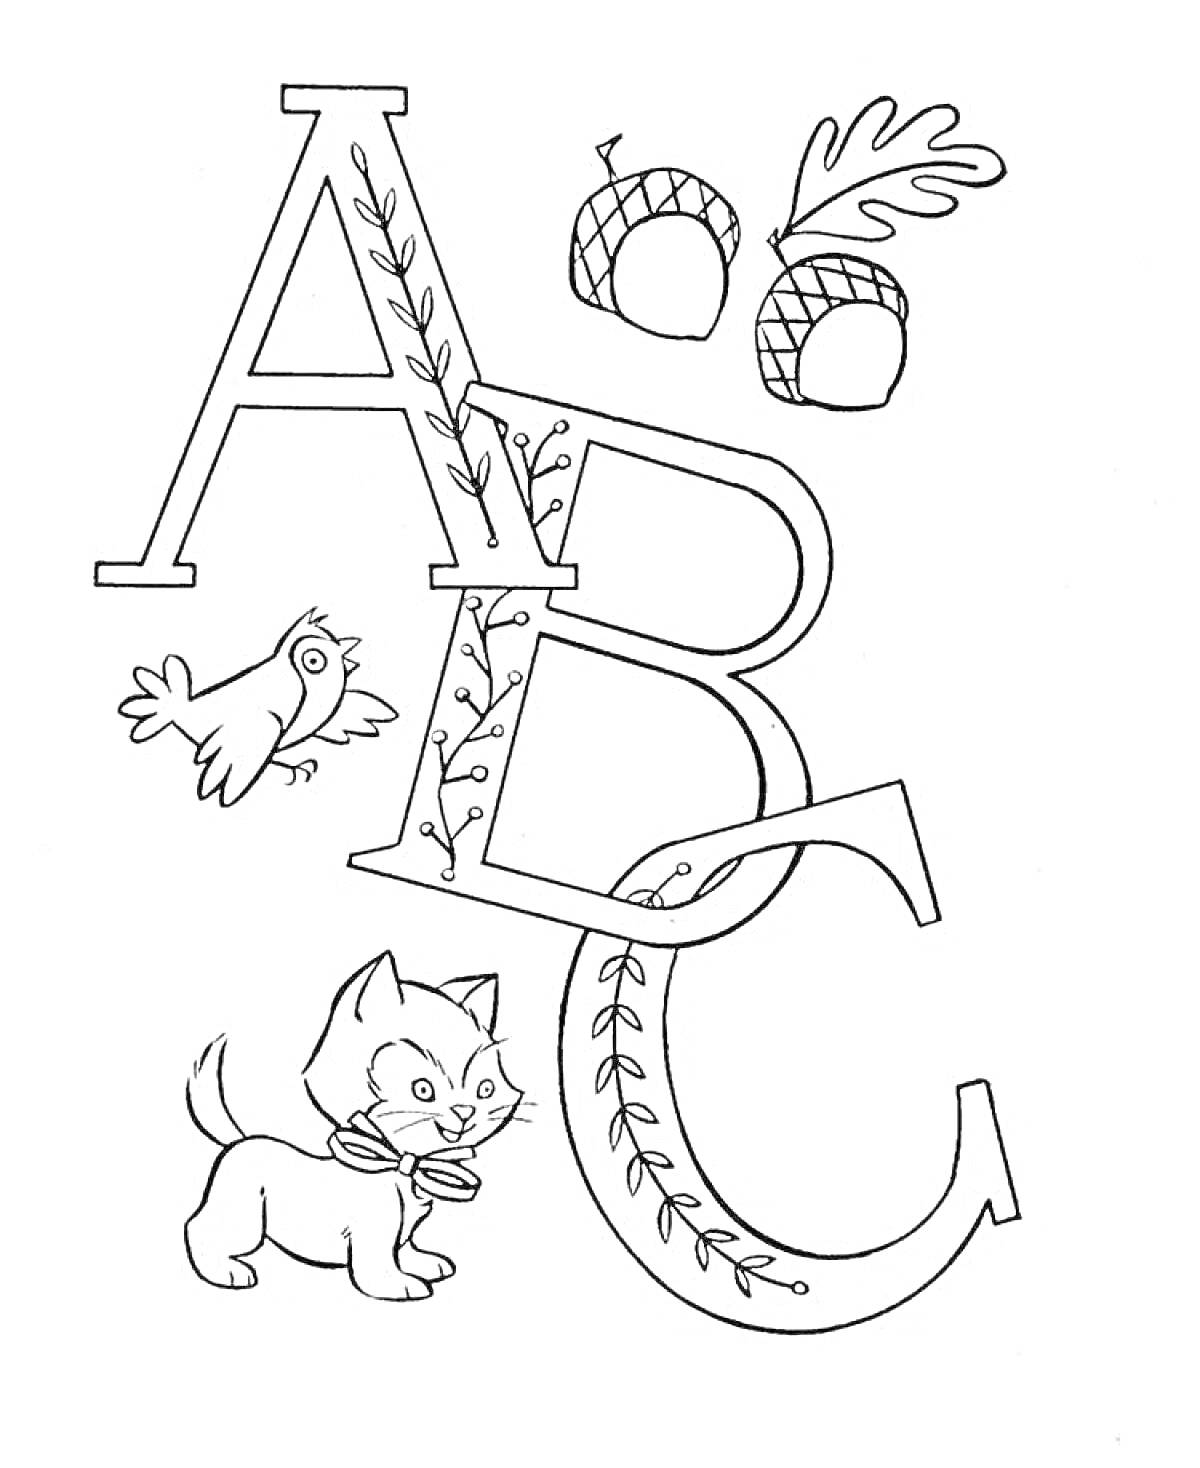 На раскраске изображено: Буква B, Буква C, Желуди, Листья, Птица, Алфавит